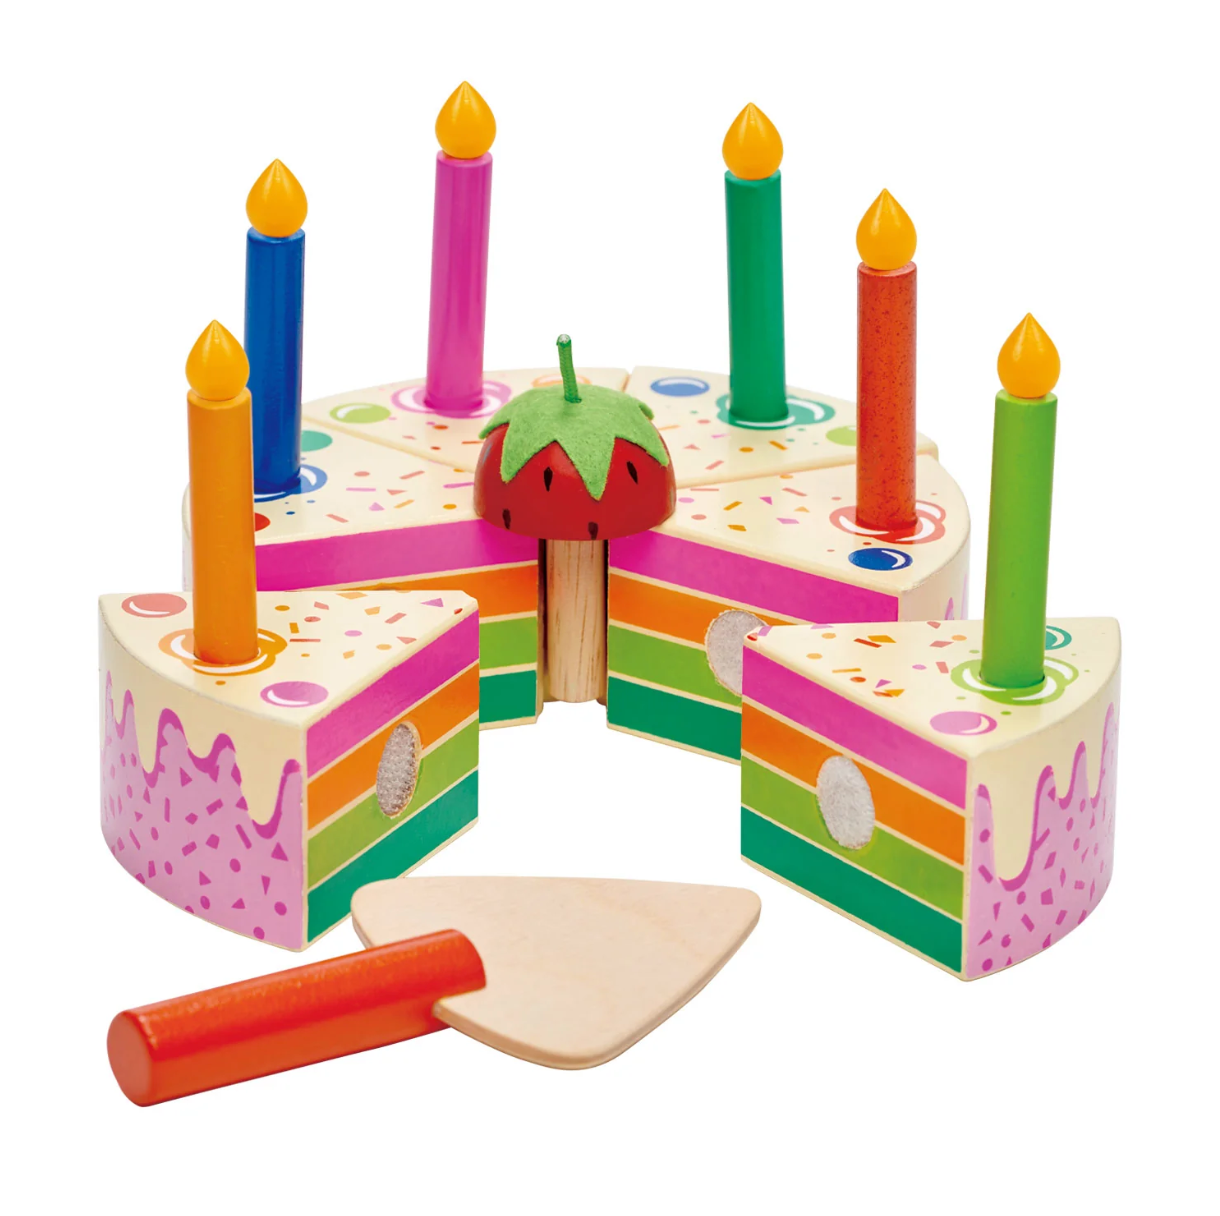 Load image into Gallery viewer, Rainbow Birthday Cake
